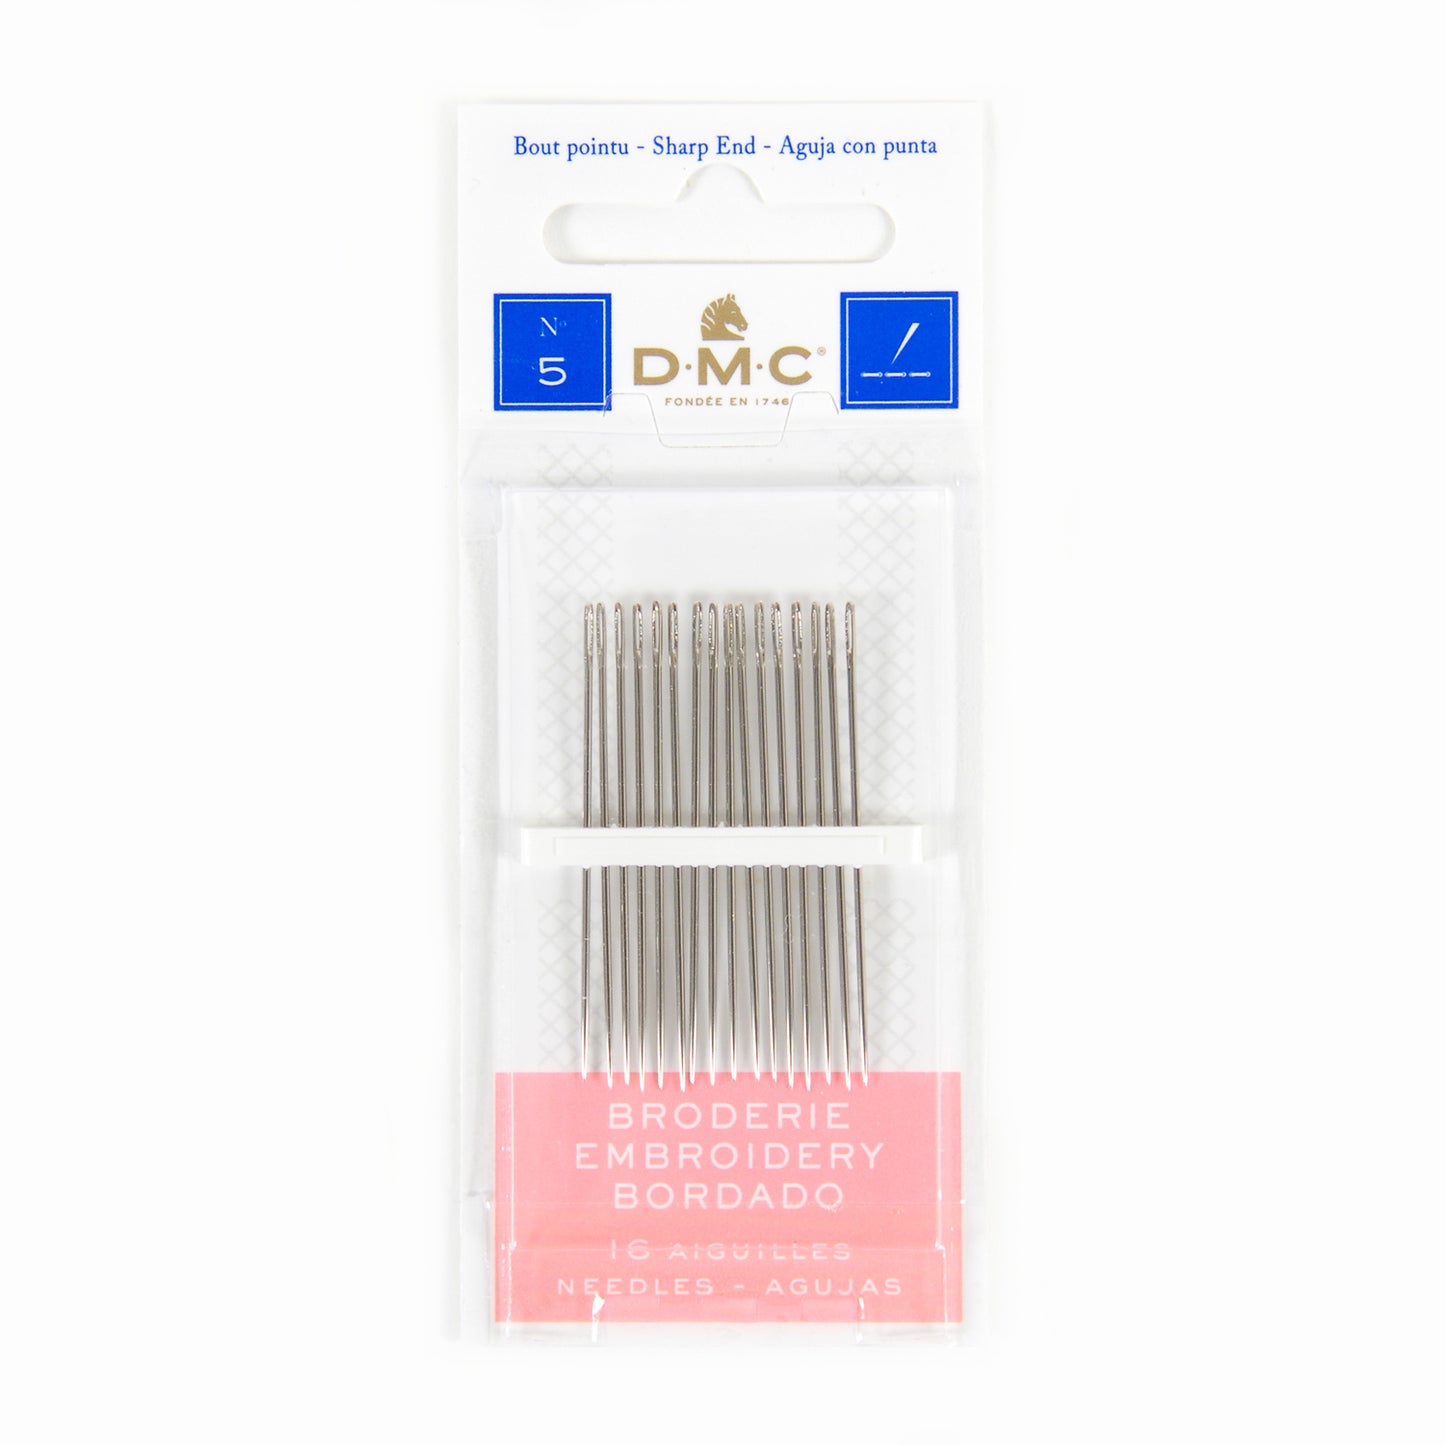 DMC Embroidery Sharps Needles - Sizes 5 Primary Image